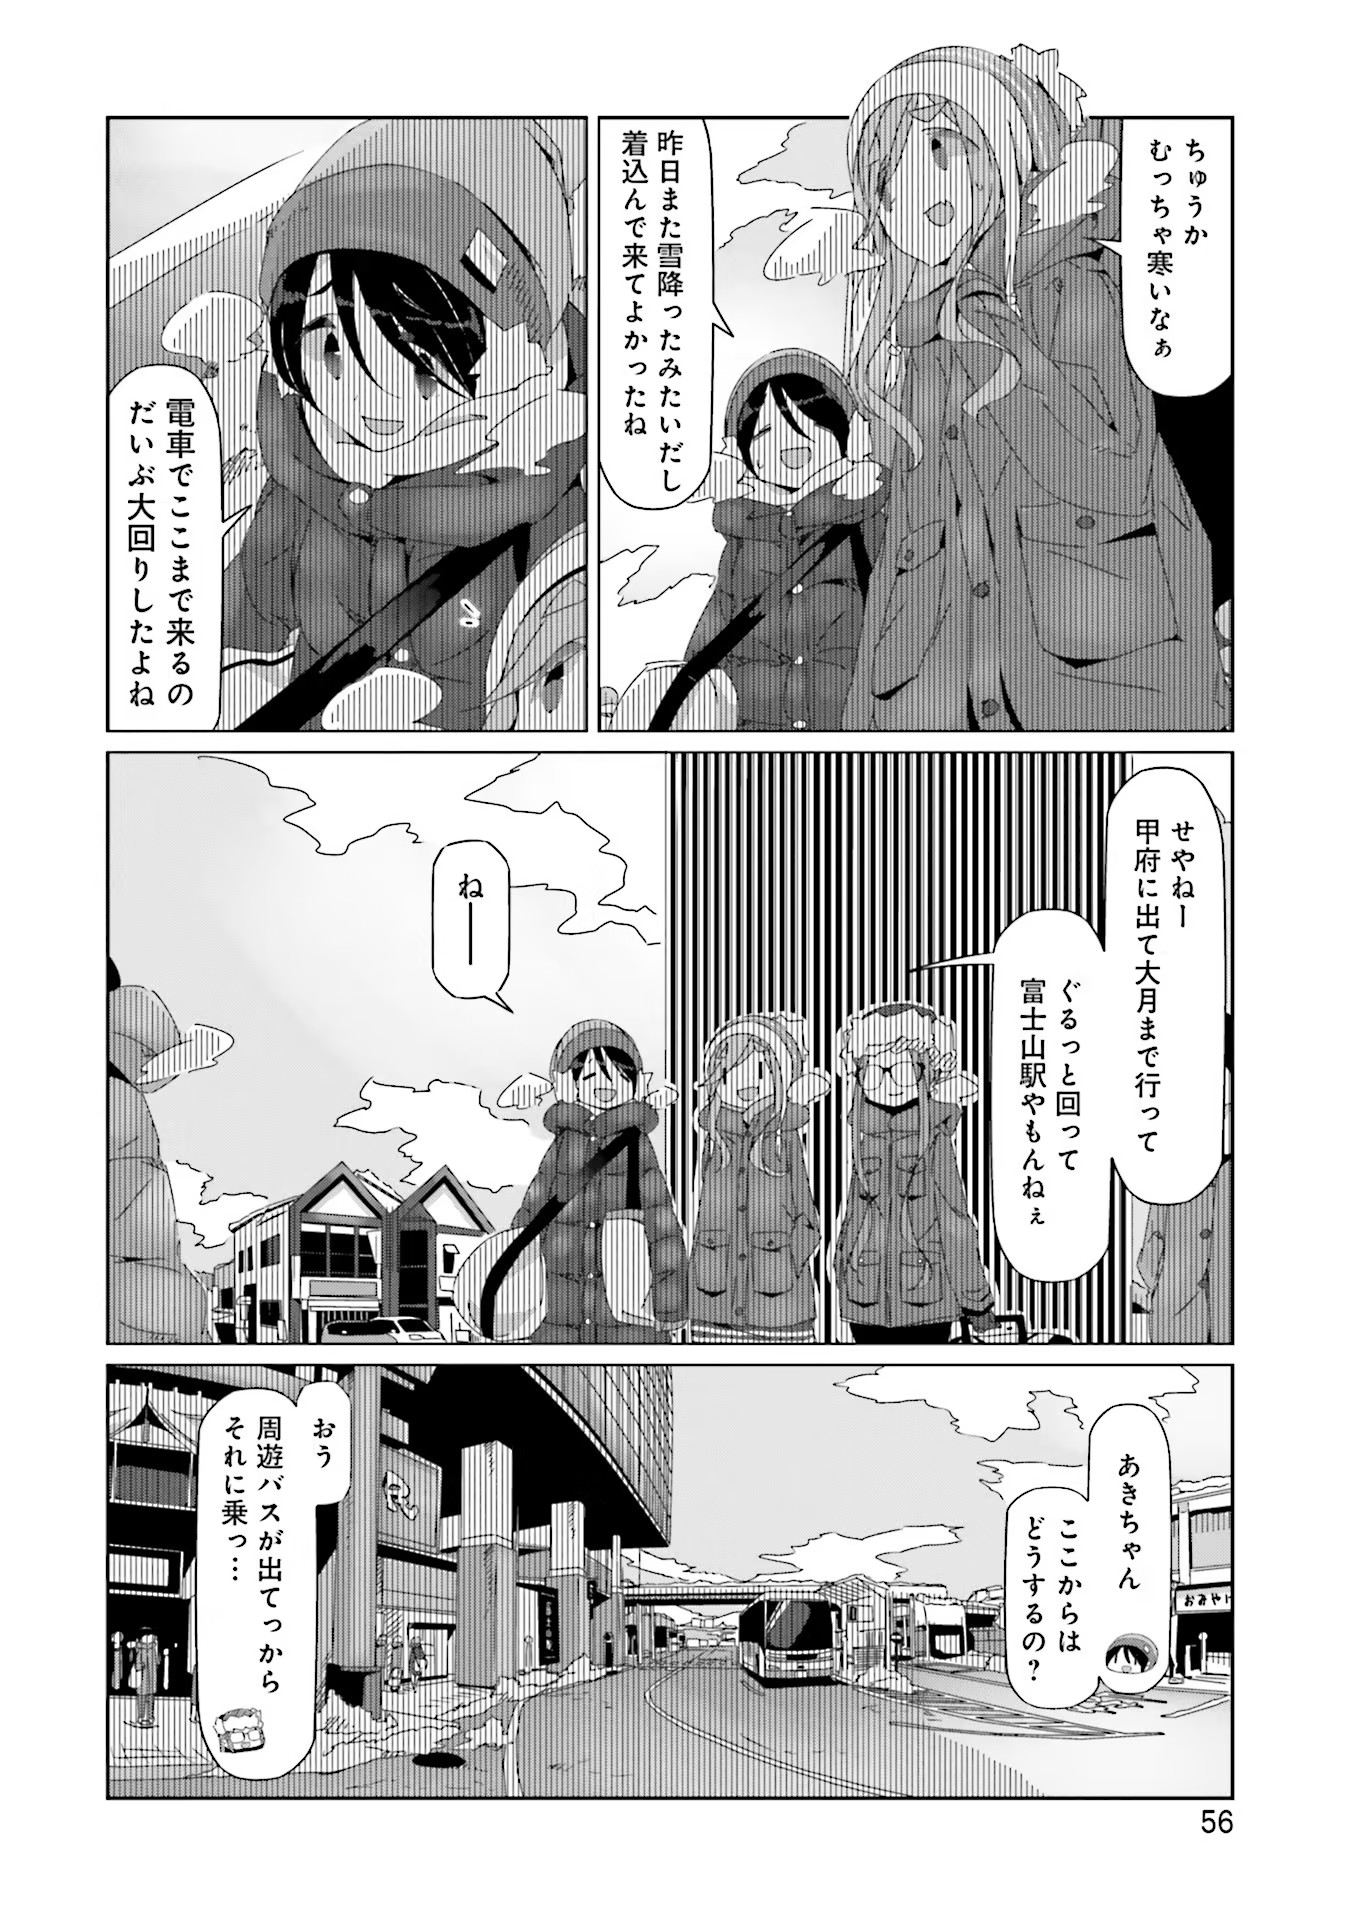 Yuru Camp - Chapter 31 - Page 2